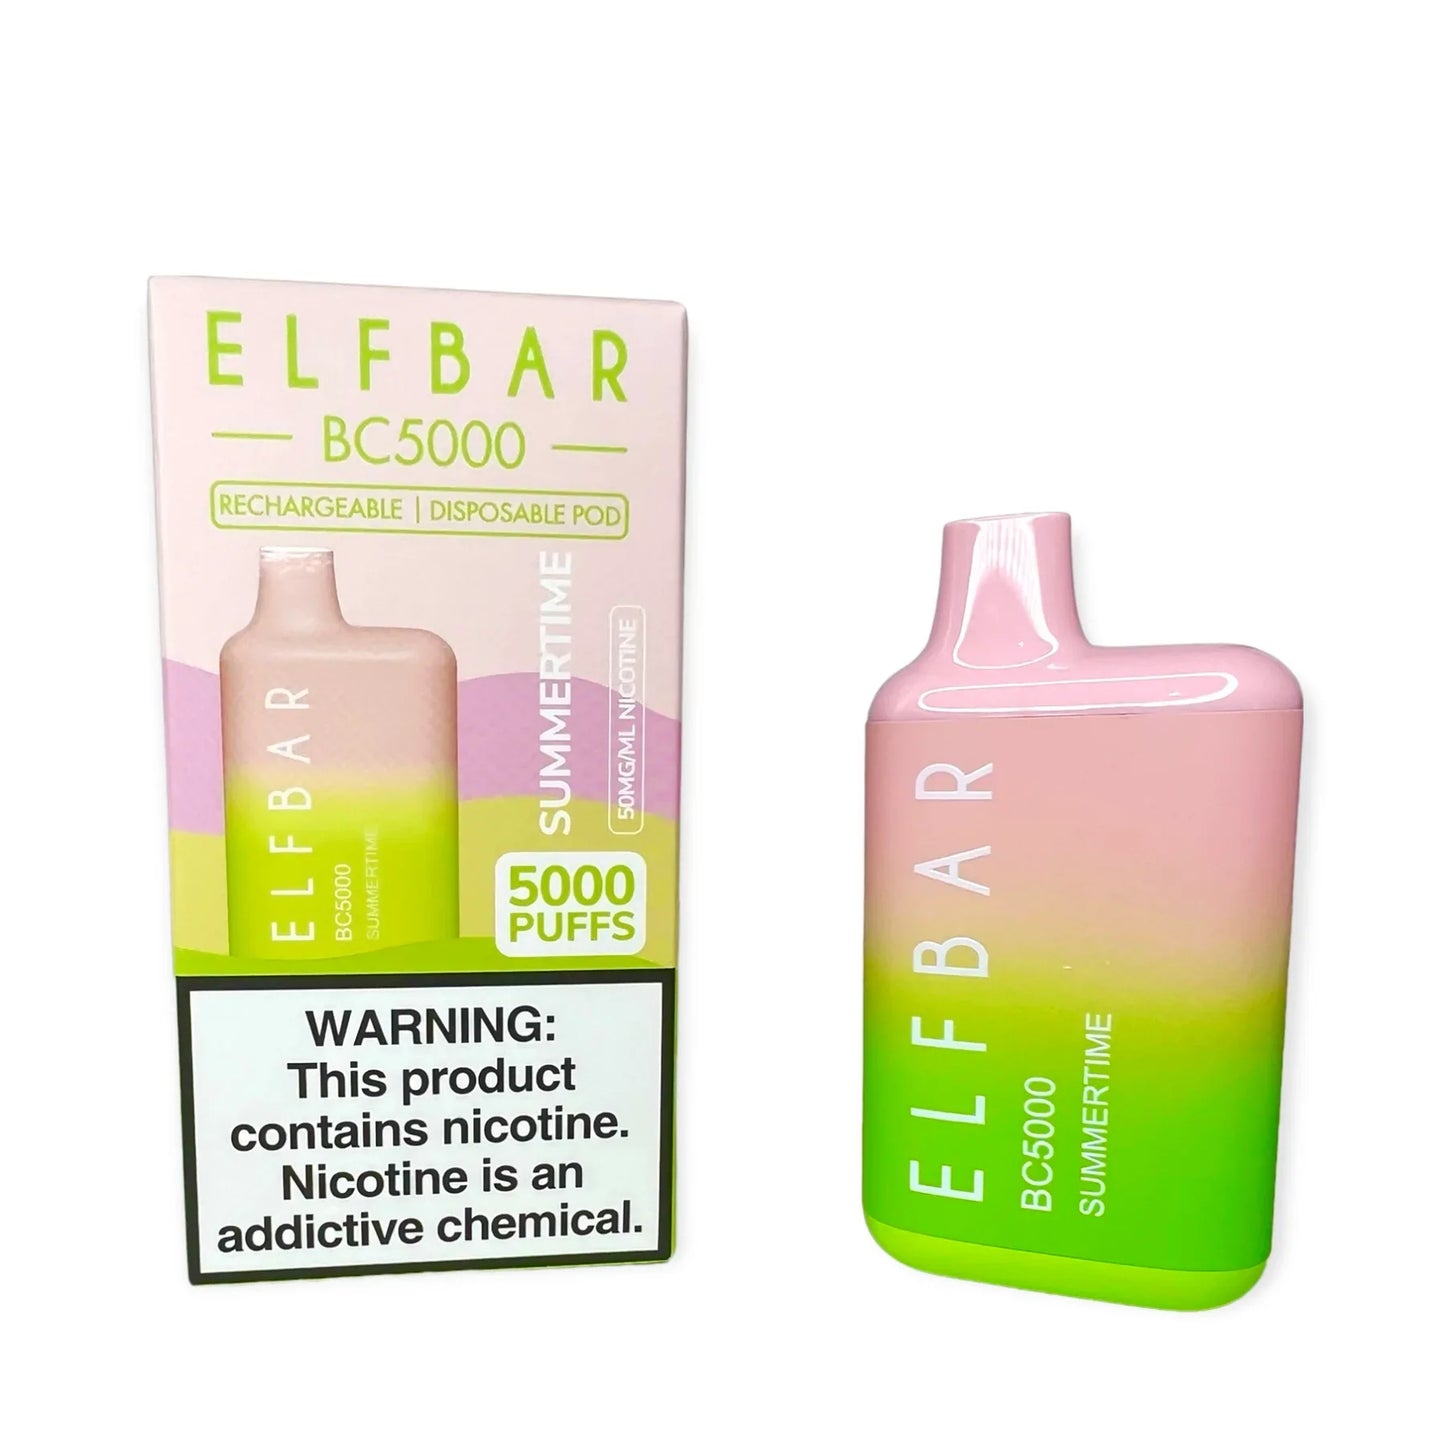 ELF BAR Summertime Flavor BC5000 5000 Puffs Disposable Vape 13ML Best Sales Price - Disposables